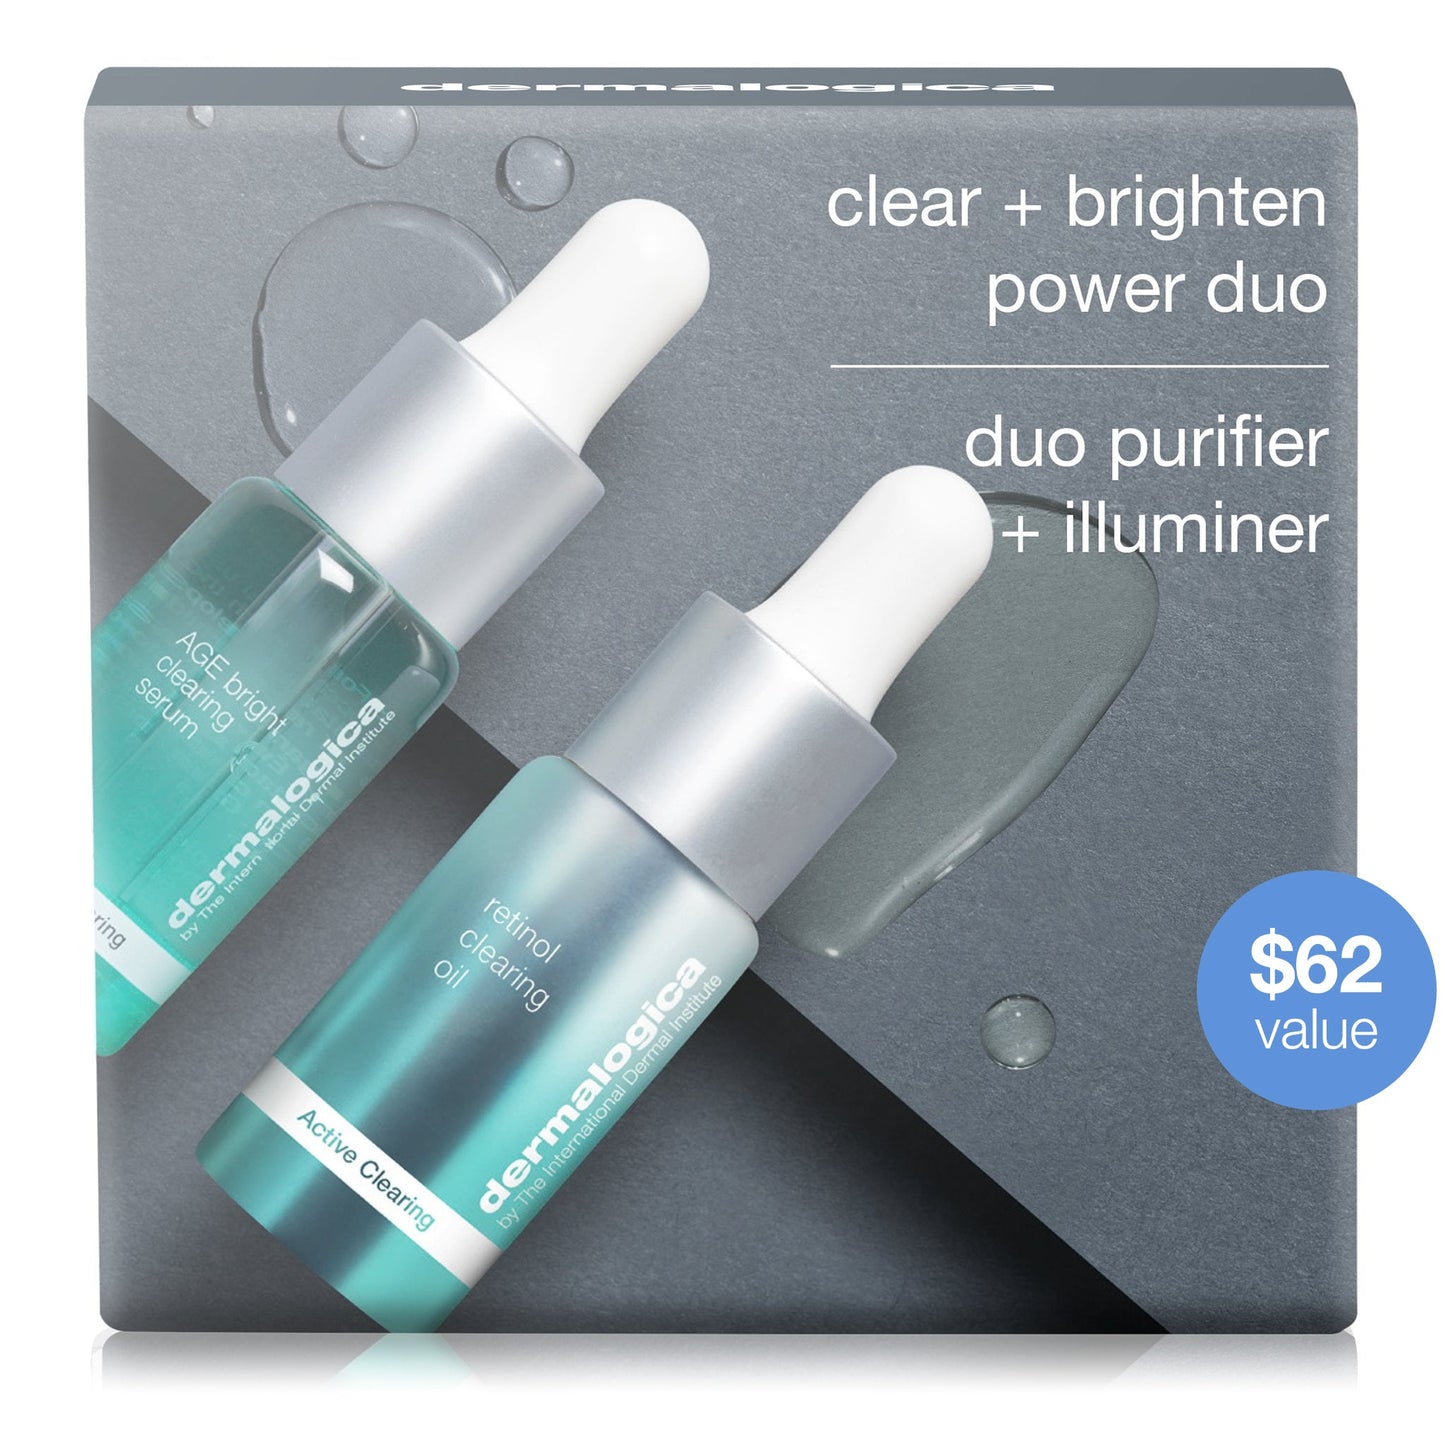 clear + brighten power duo carton